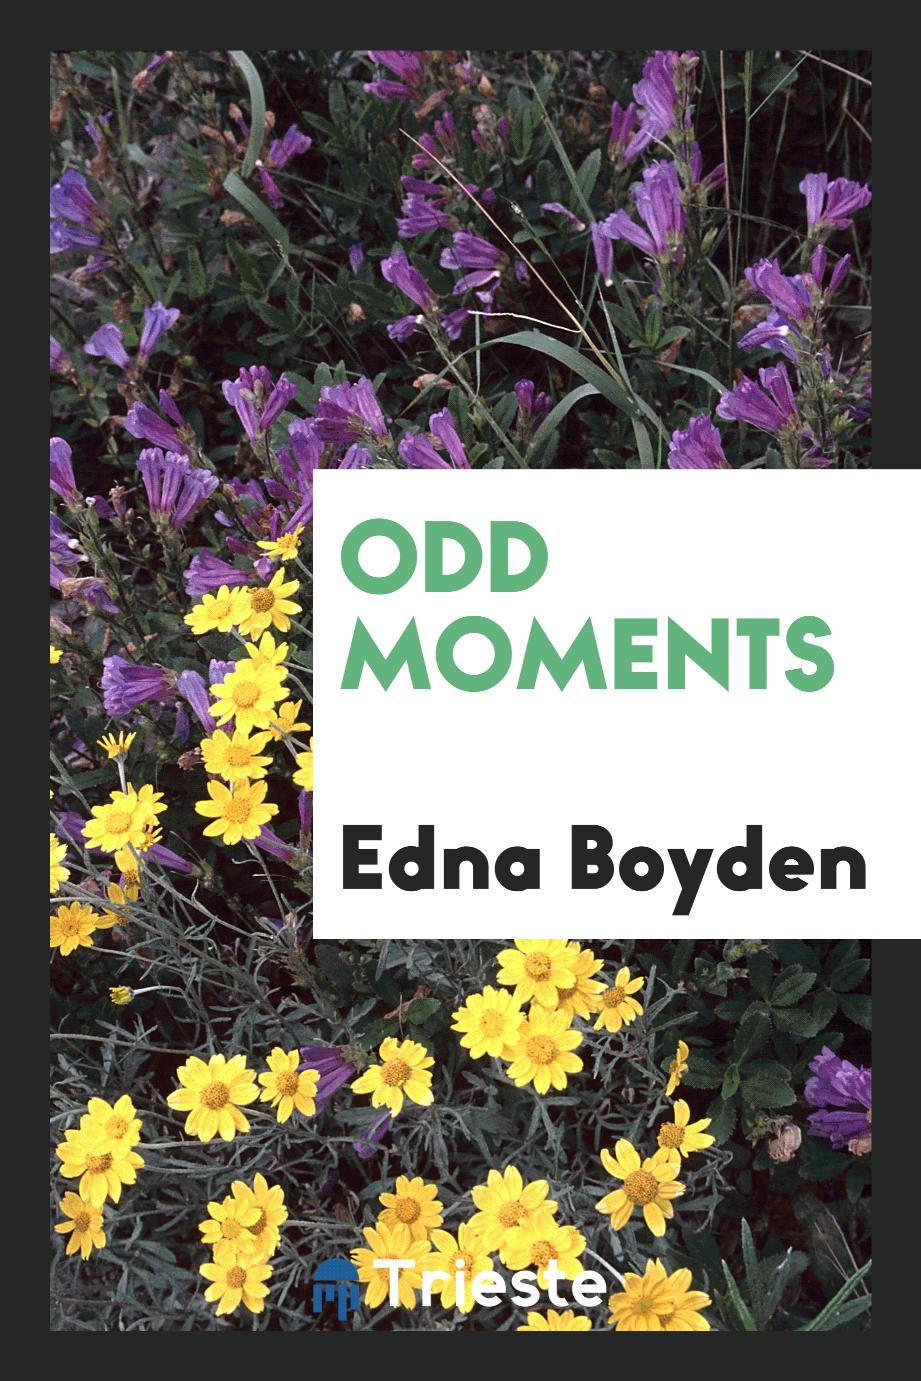 Odd moments